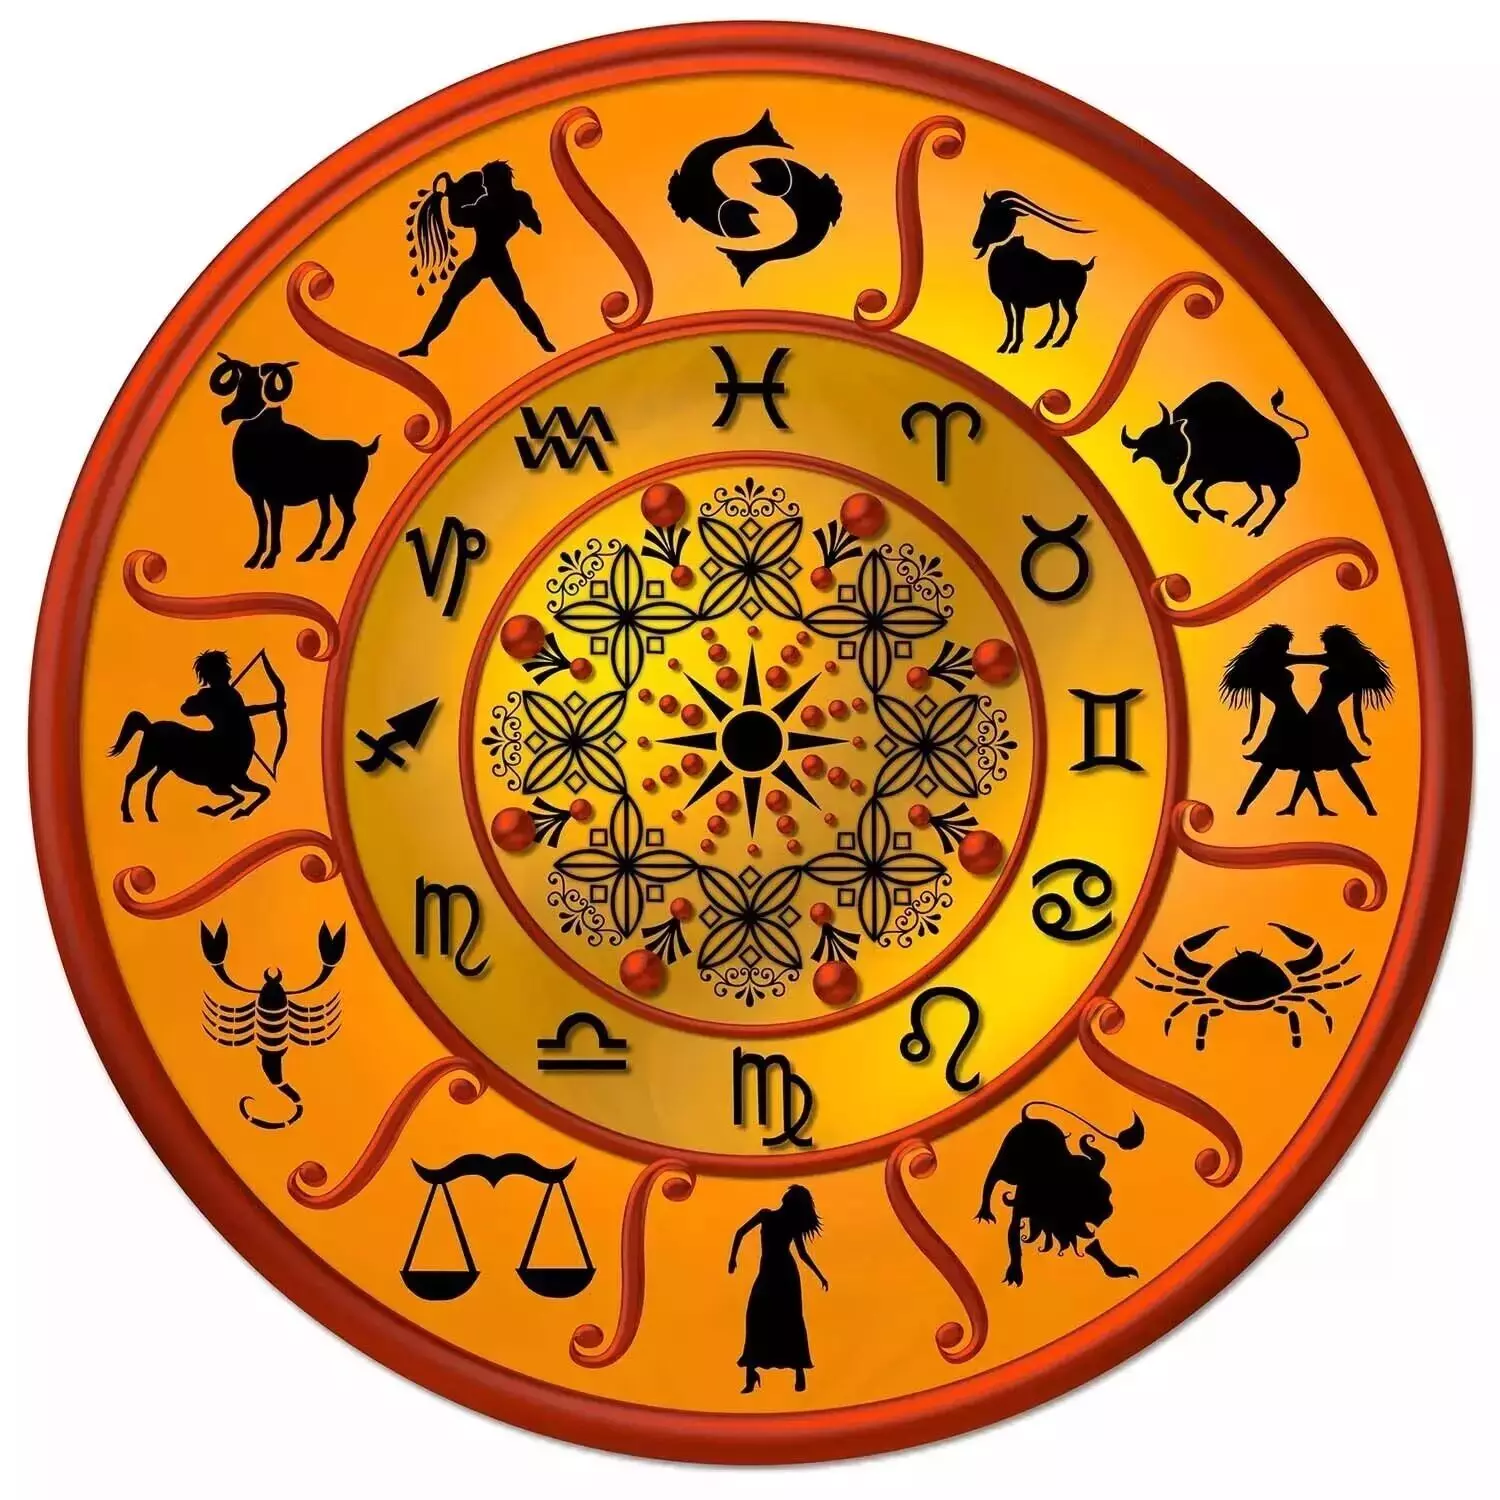 20 November – Know your todays horoscope